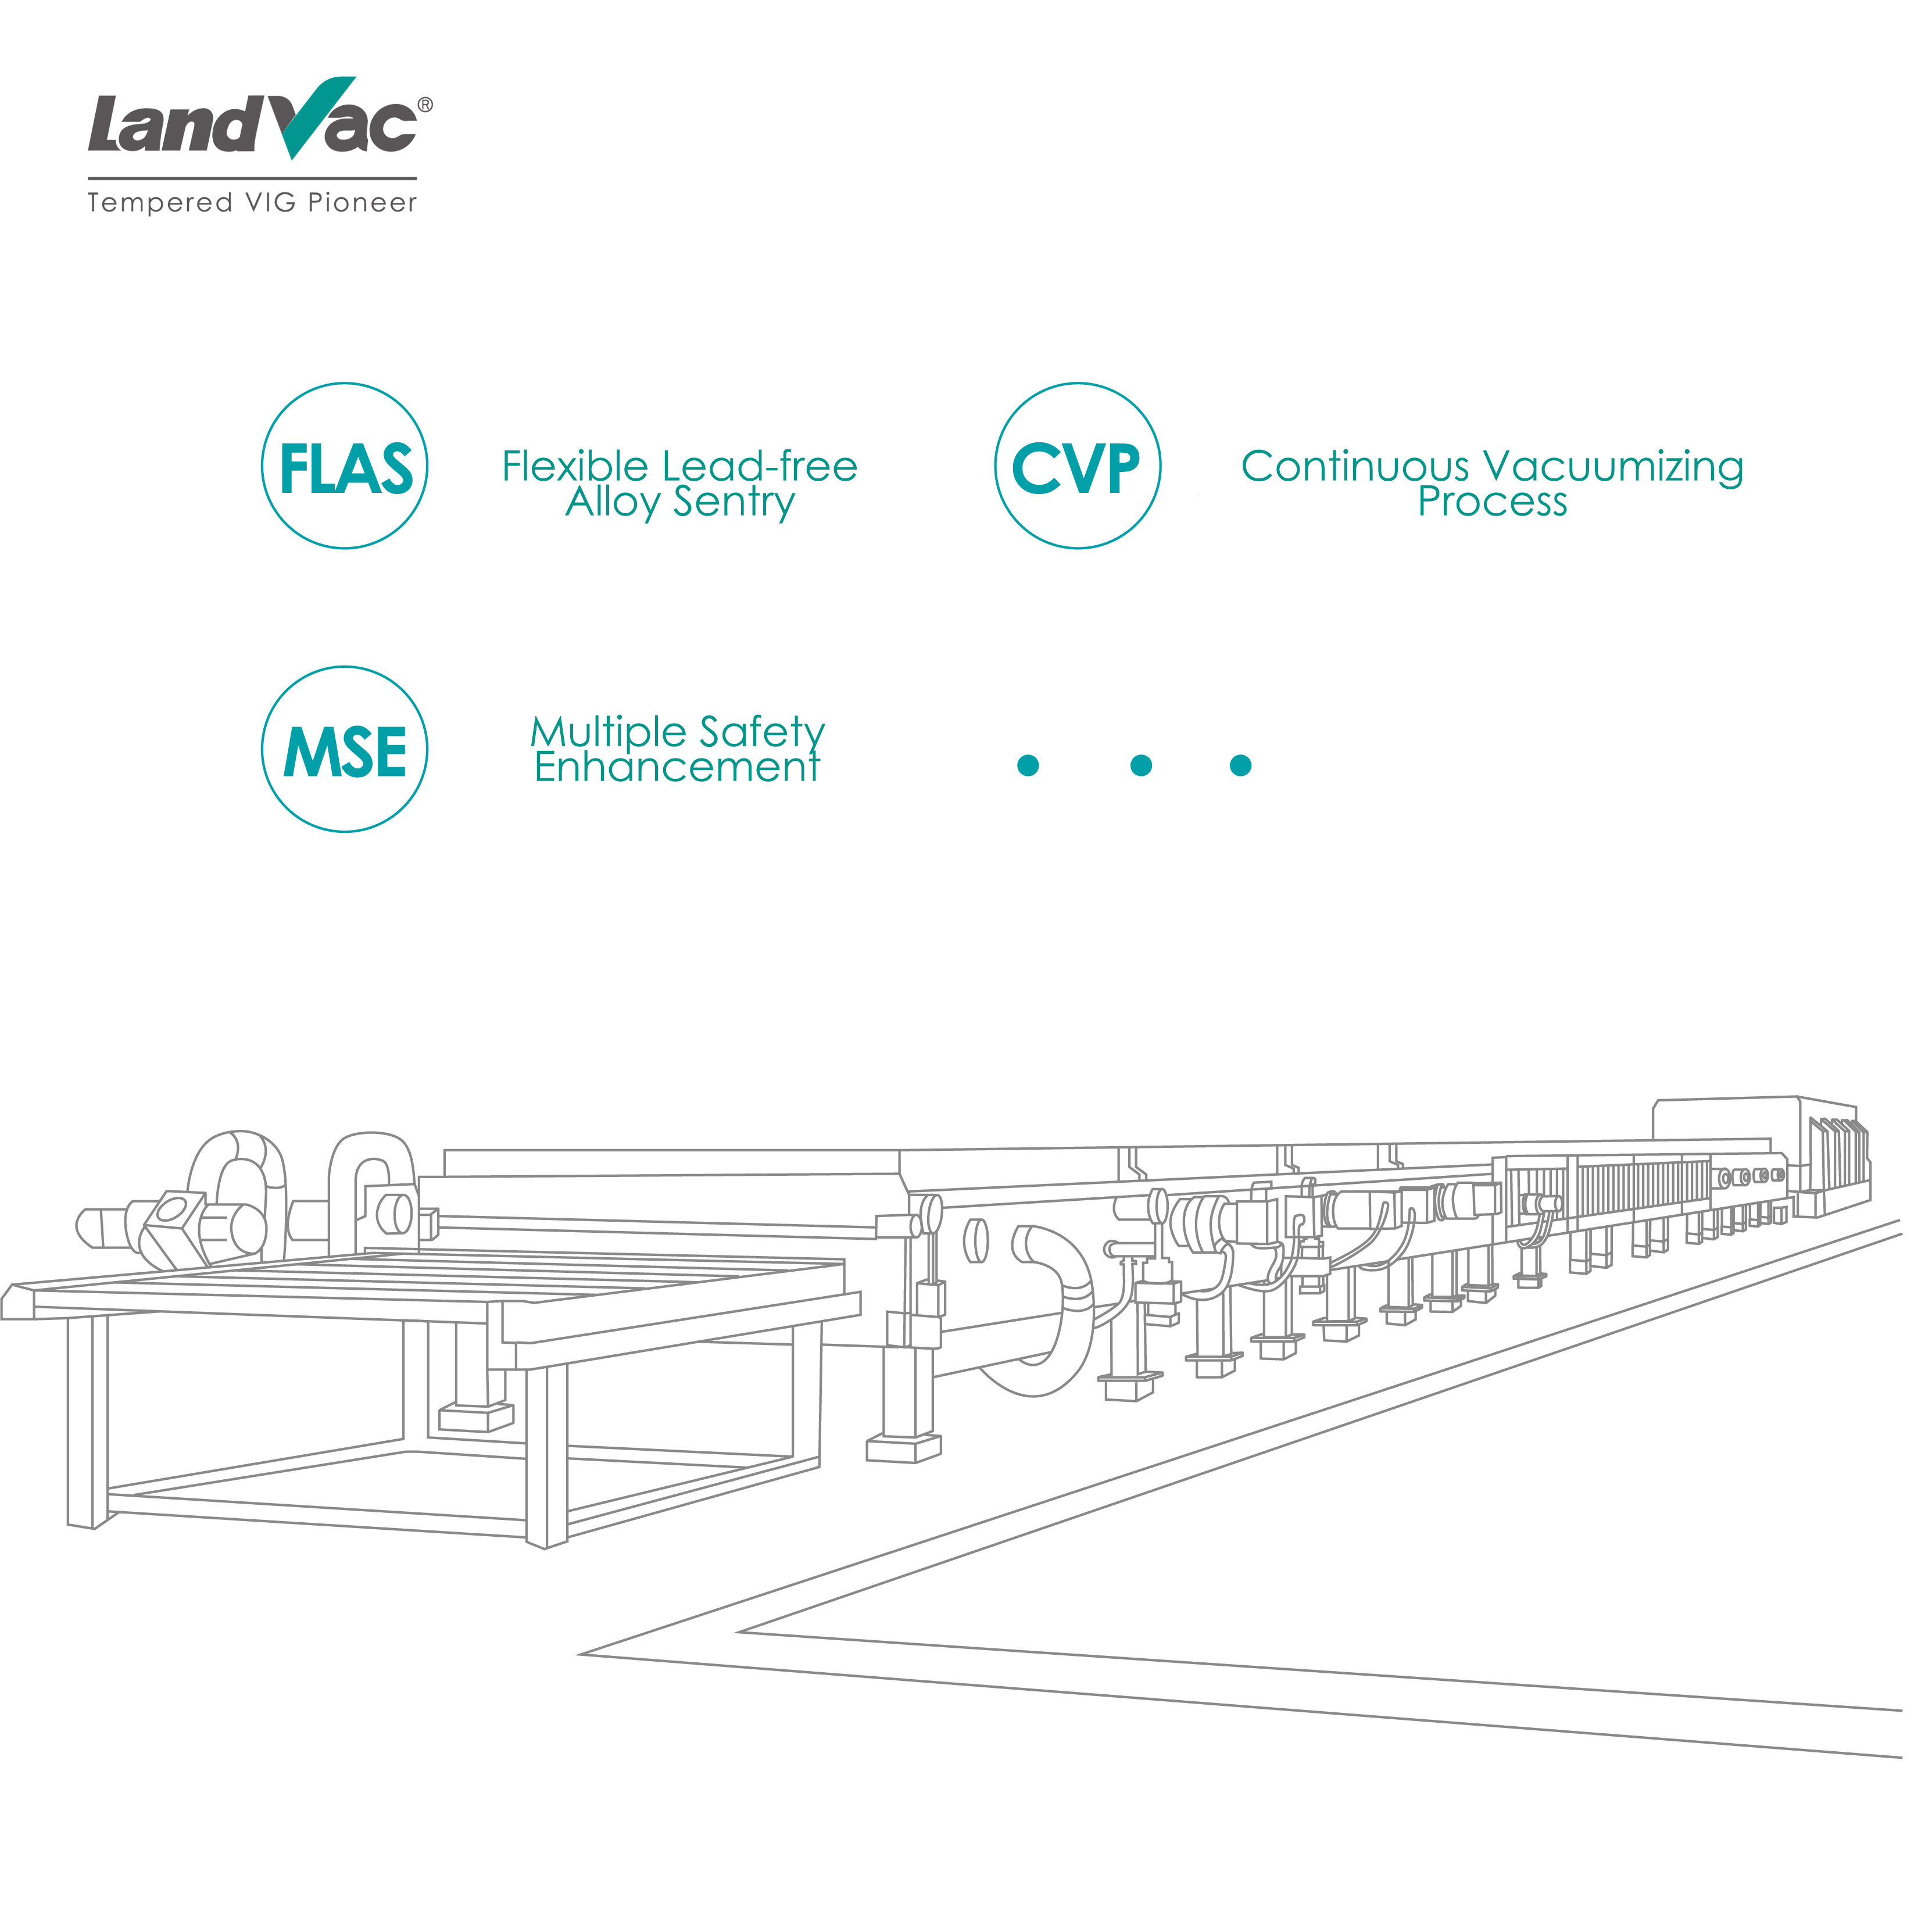 Landvac vacuum glazing technologies